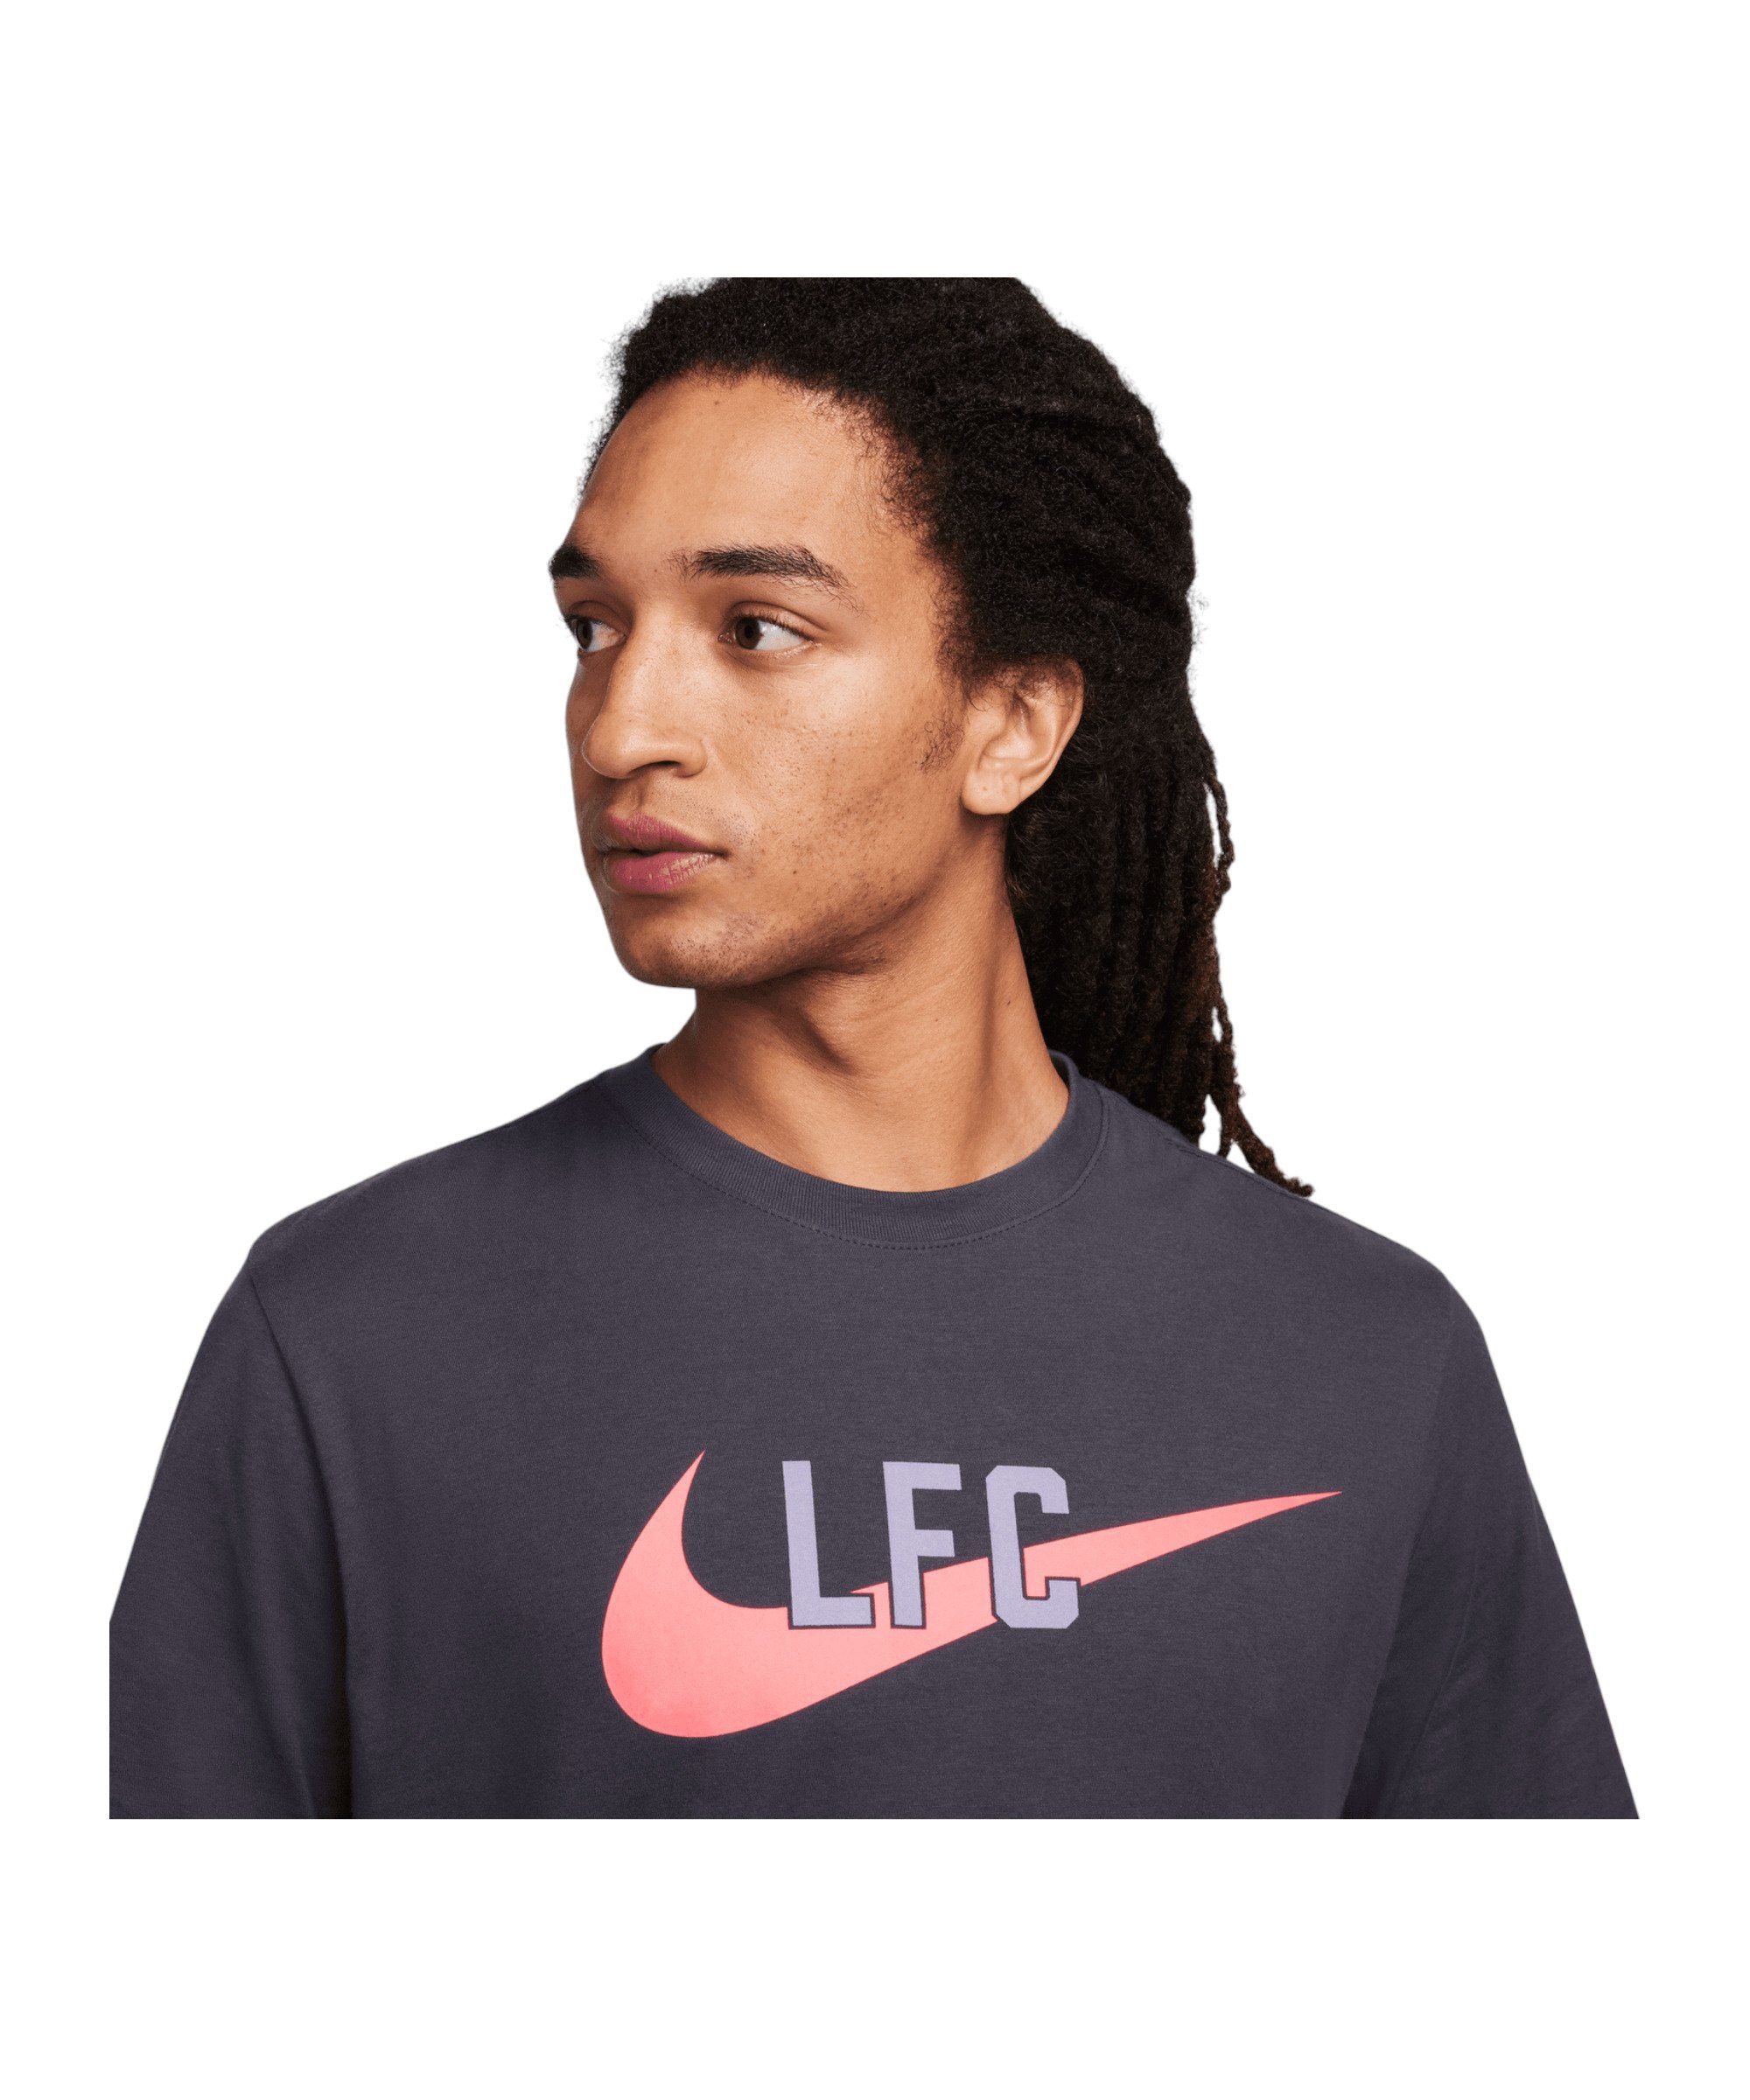 FC grau Liverpool Nike T-Shirt default T-Shirt Swoosh